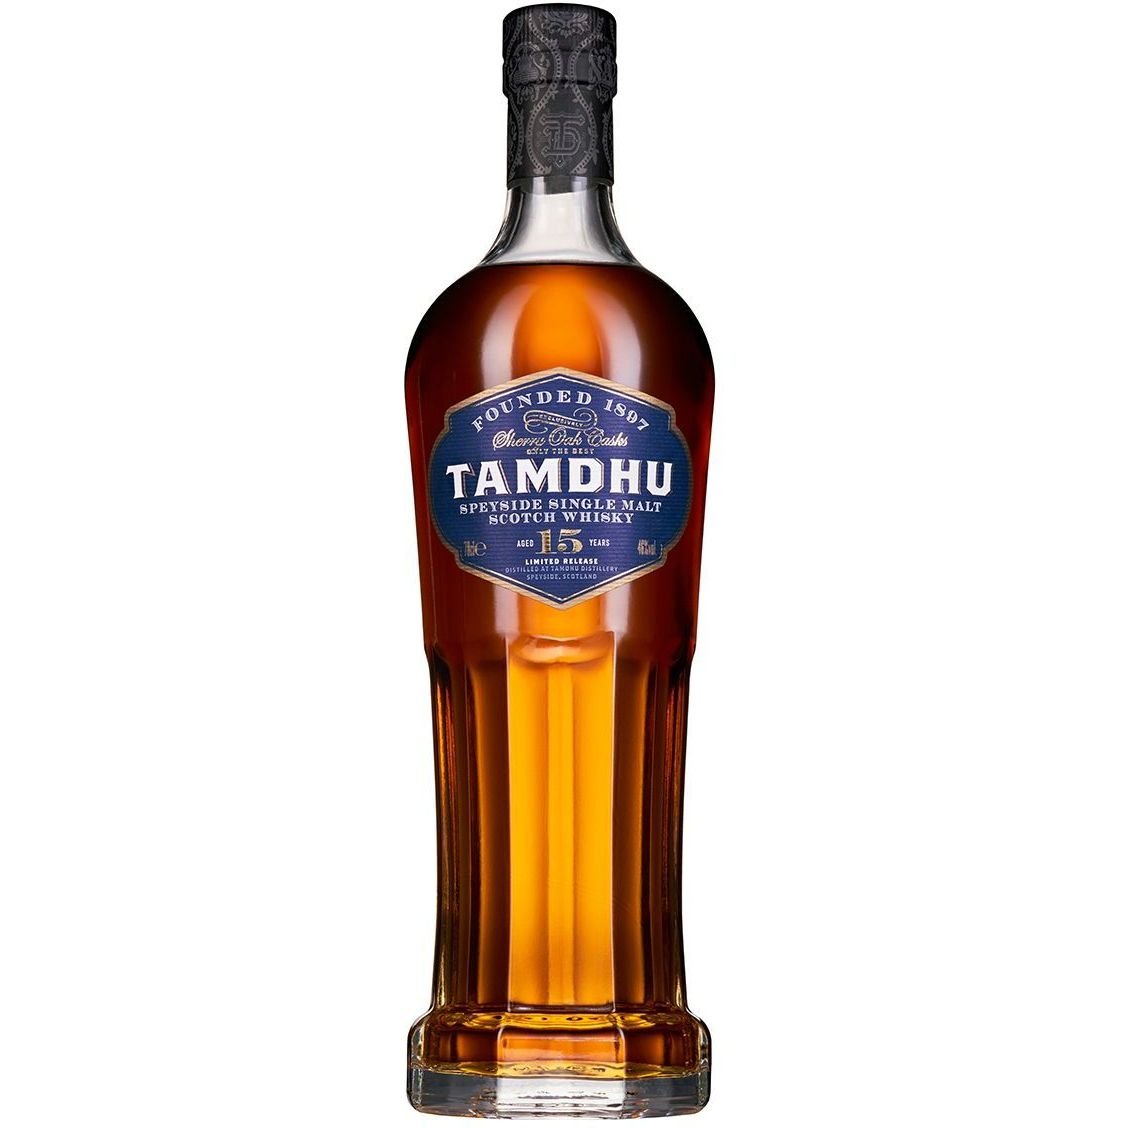 Виски Tamdhu 15 yo Single Malt Scotch Whisky 46% 0.7 л, в подарочной упаковке - фото 3